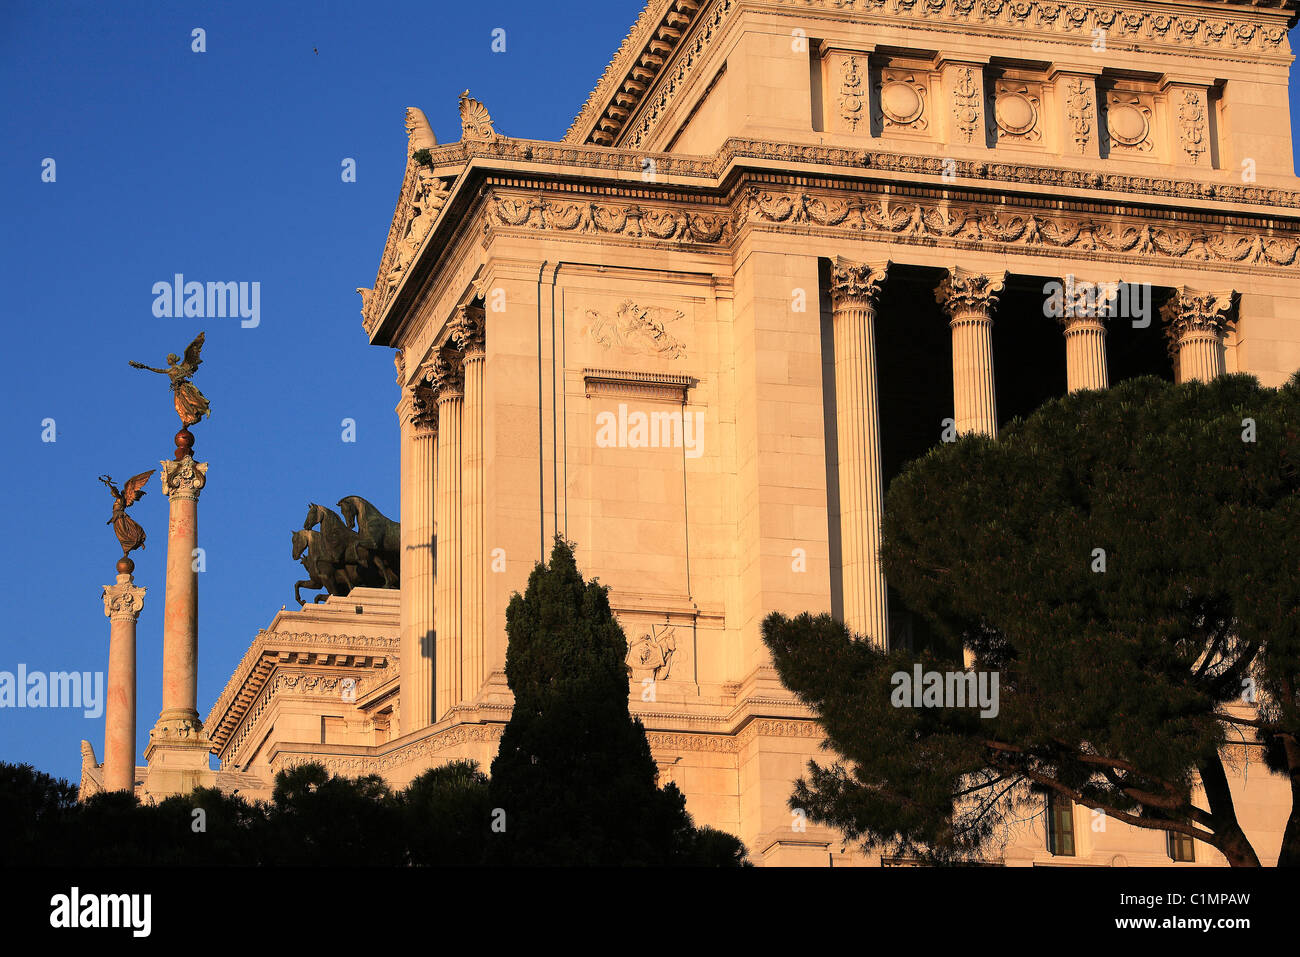 Italy, Lazio, Rome, monument Vitorio Emanuele II Stock Photo